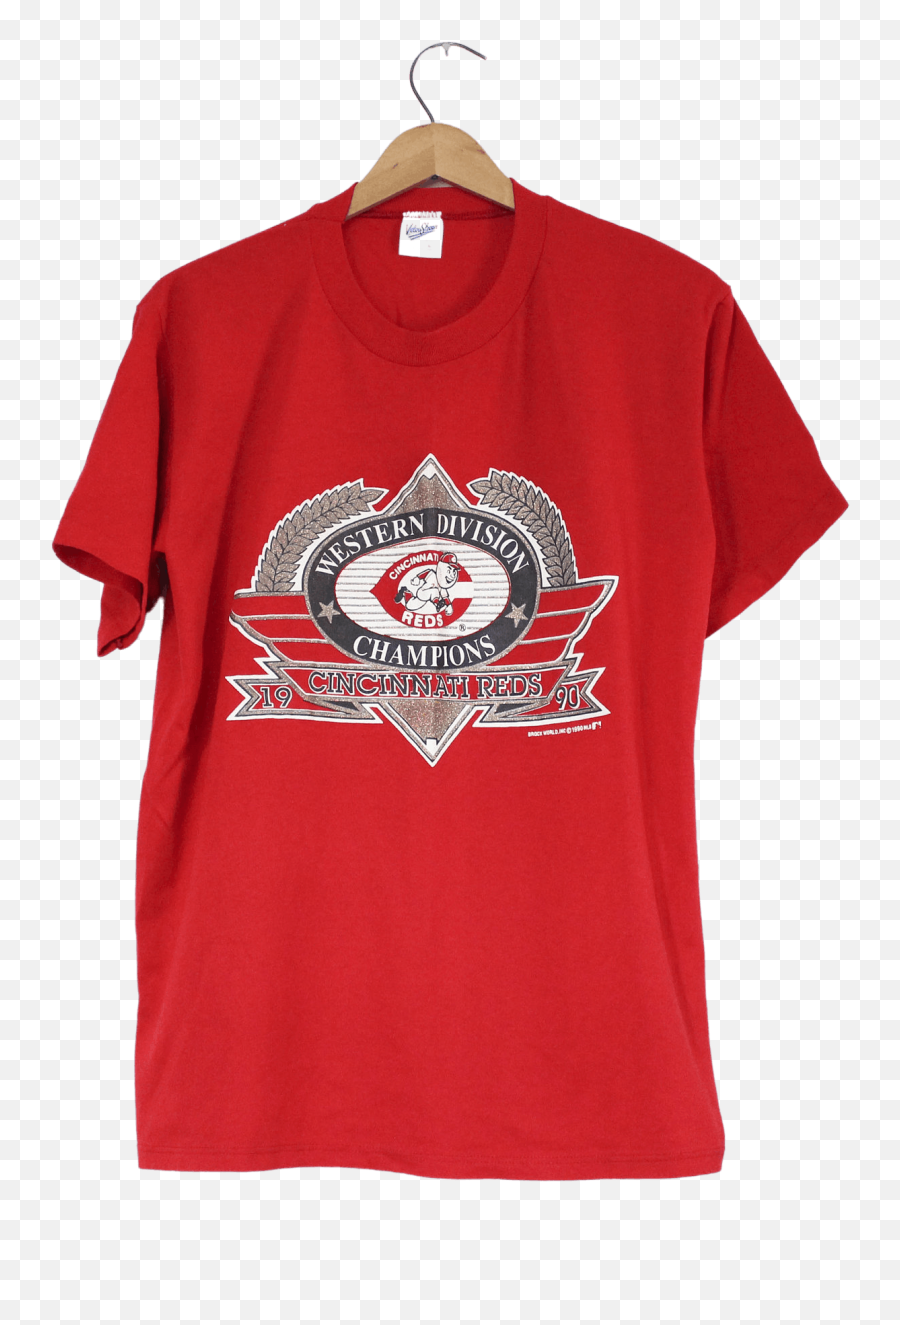 Series Champs Cotton T - Short Sleeve Emoji,Cincinnati Reds Logo